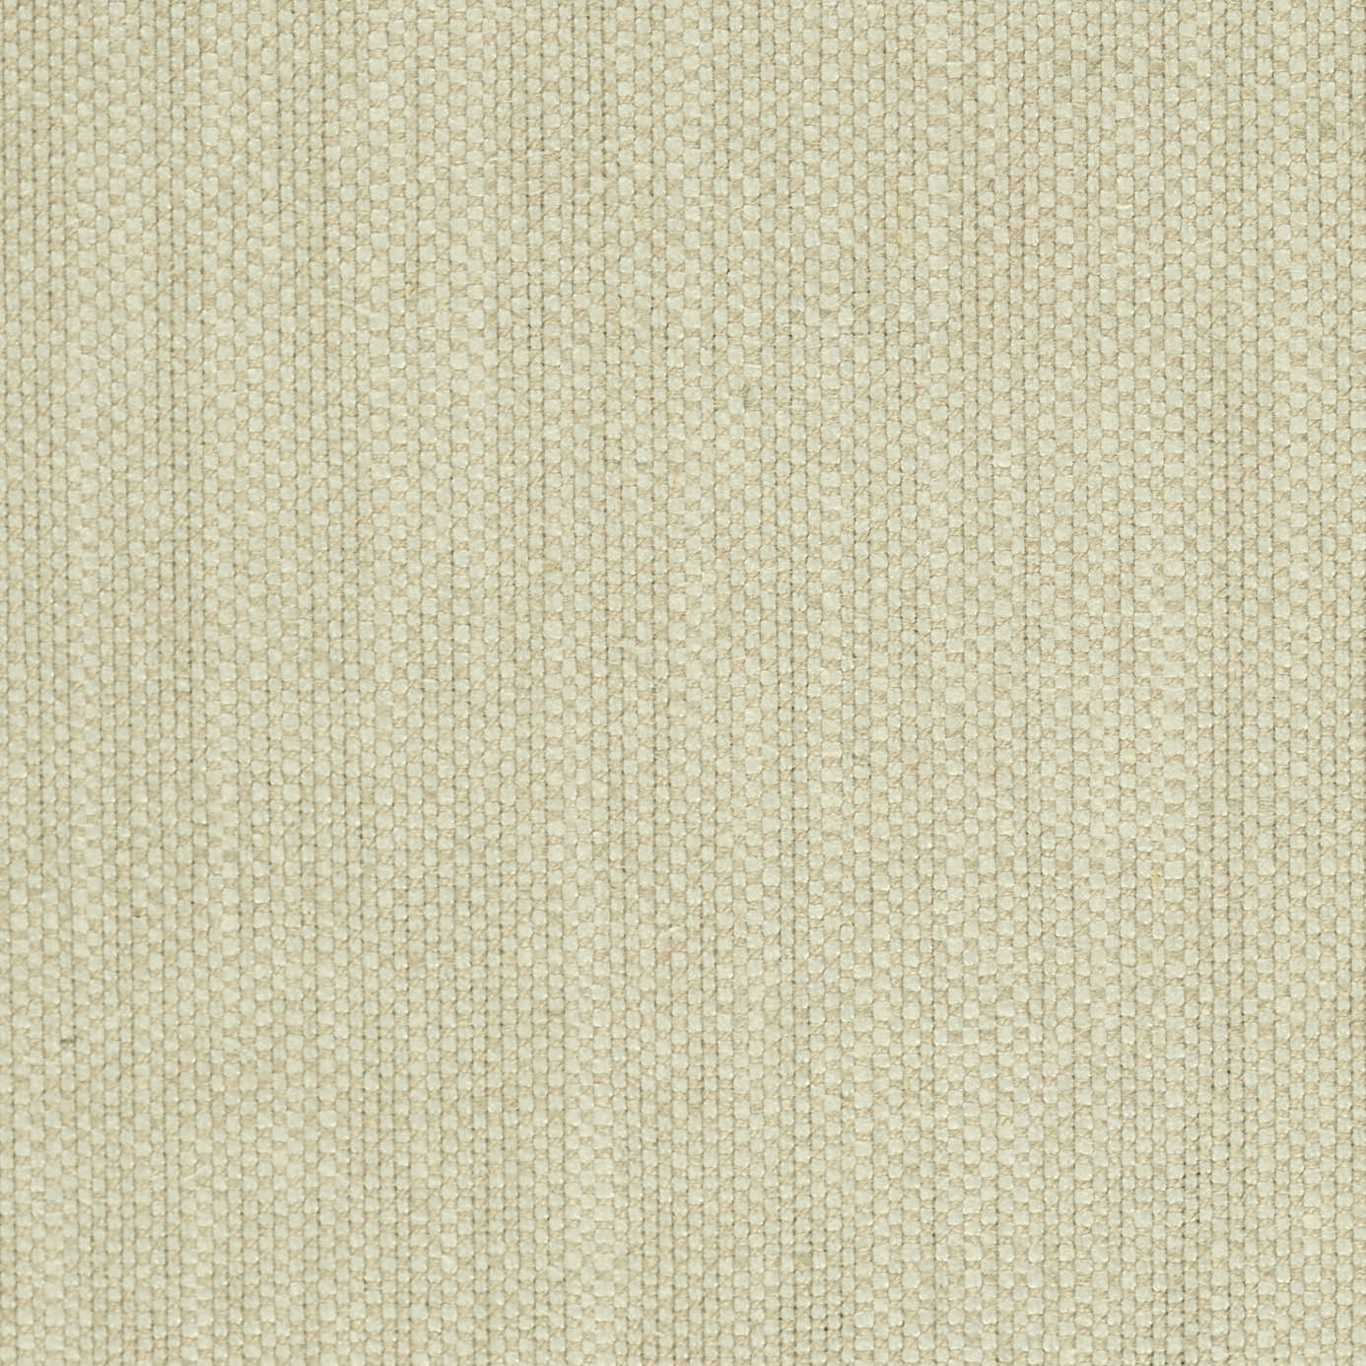 Atom Fabric by Harlequin - HTEX440241 - Pebble